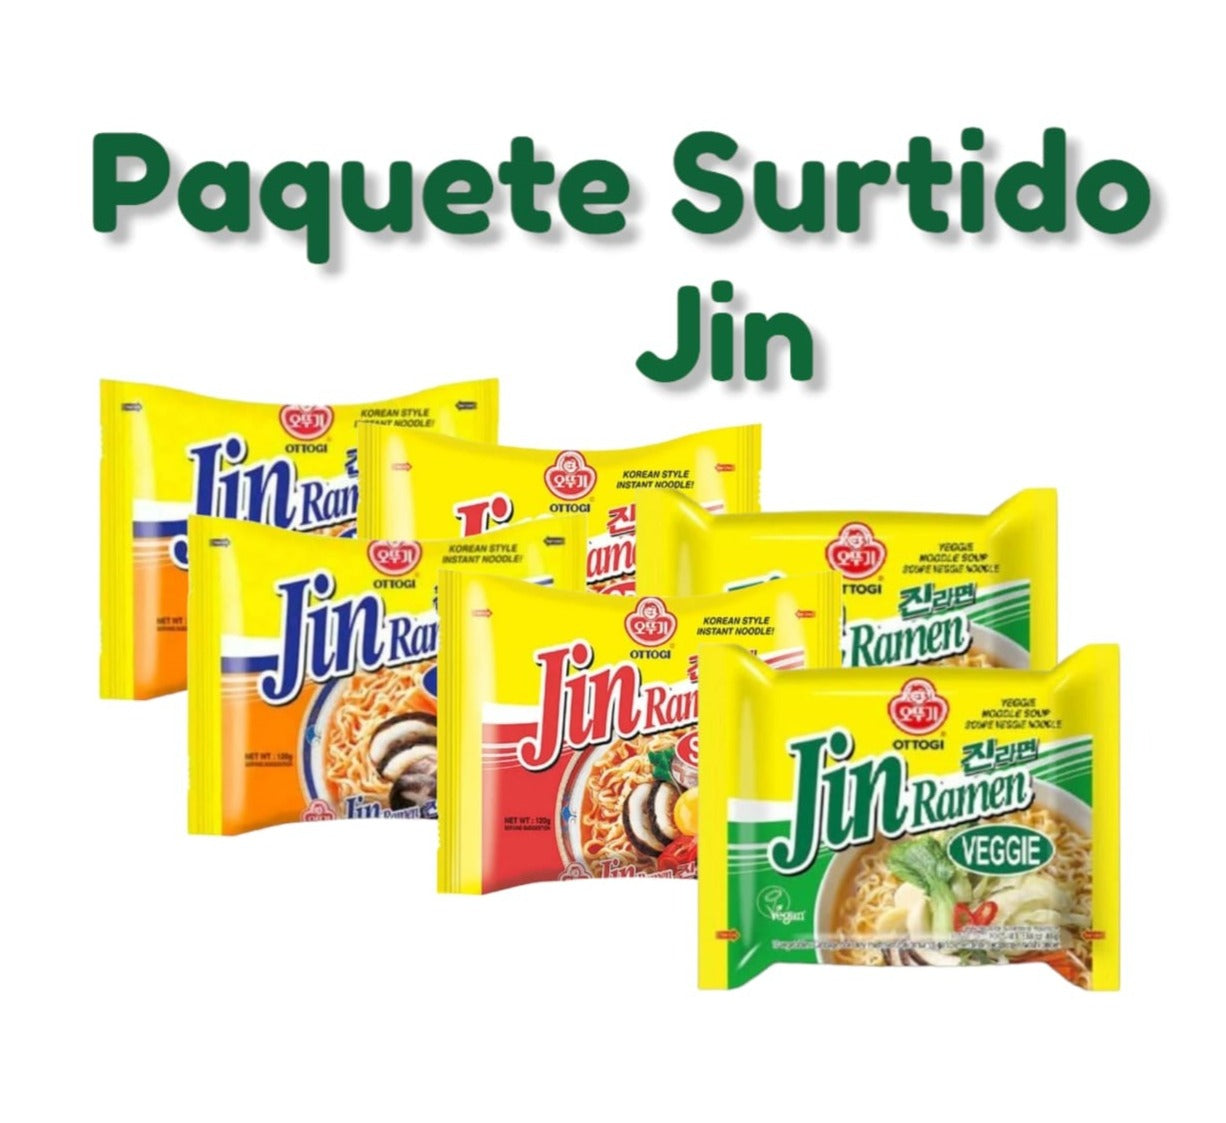 Paquete Surtido Jin